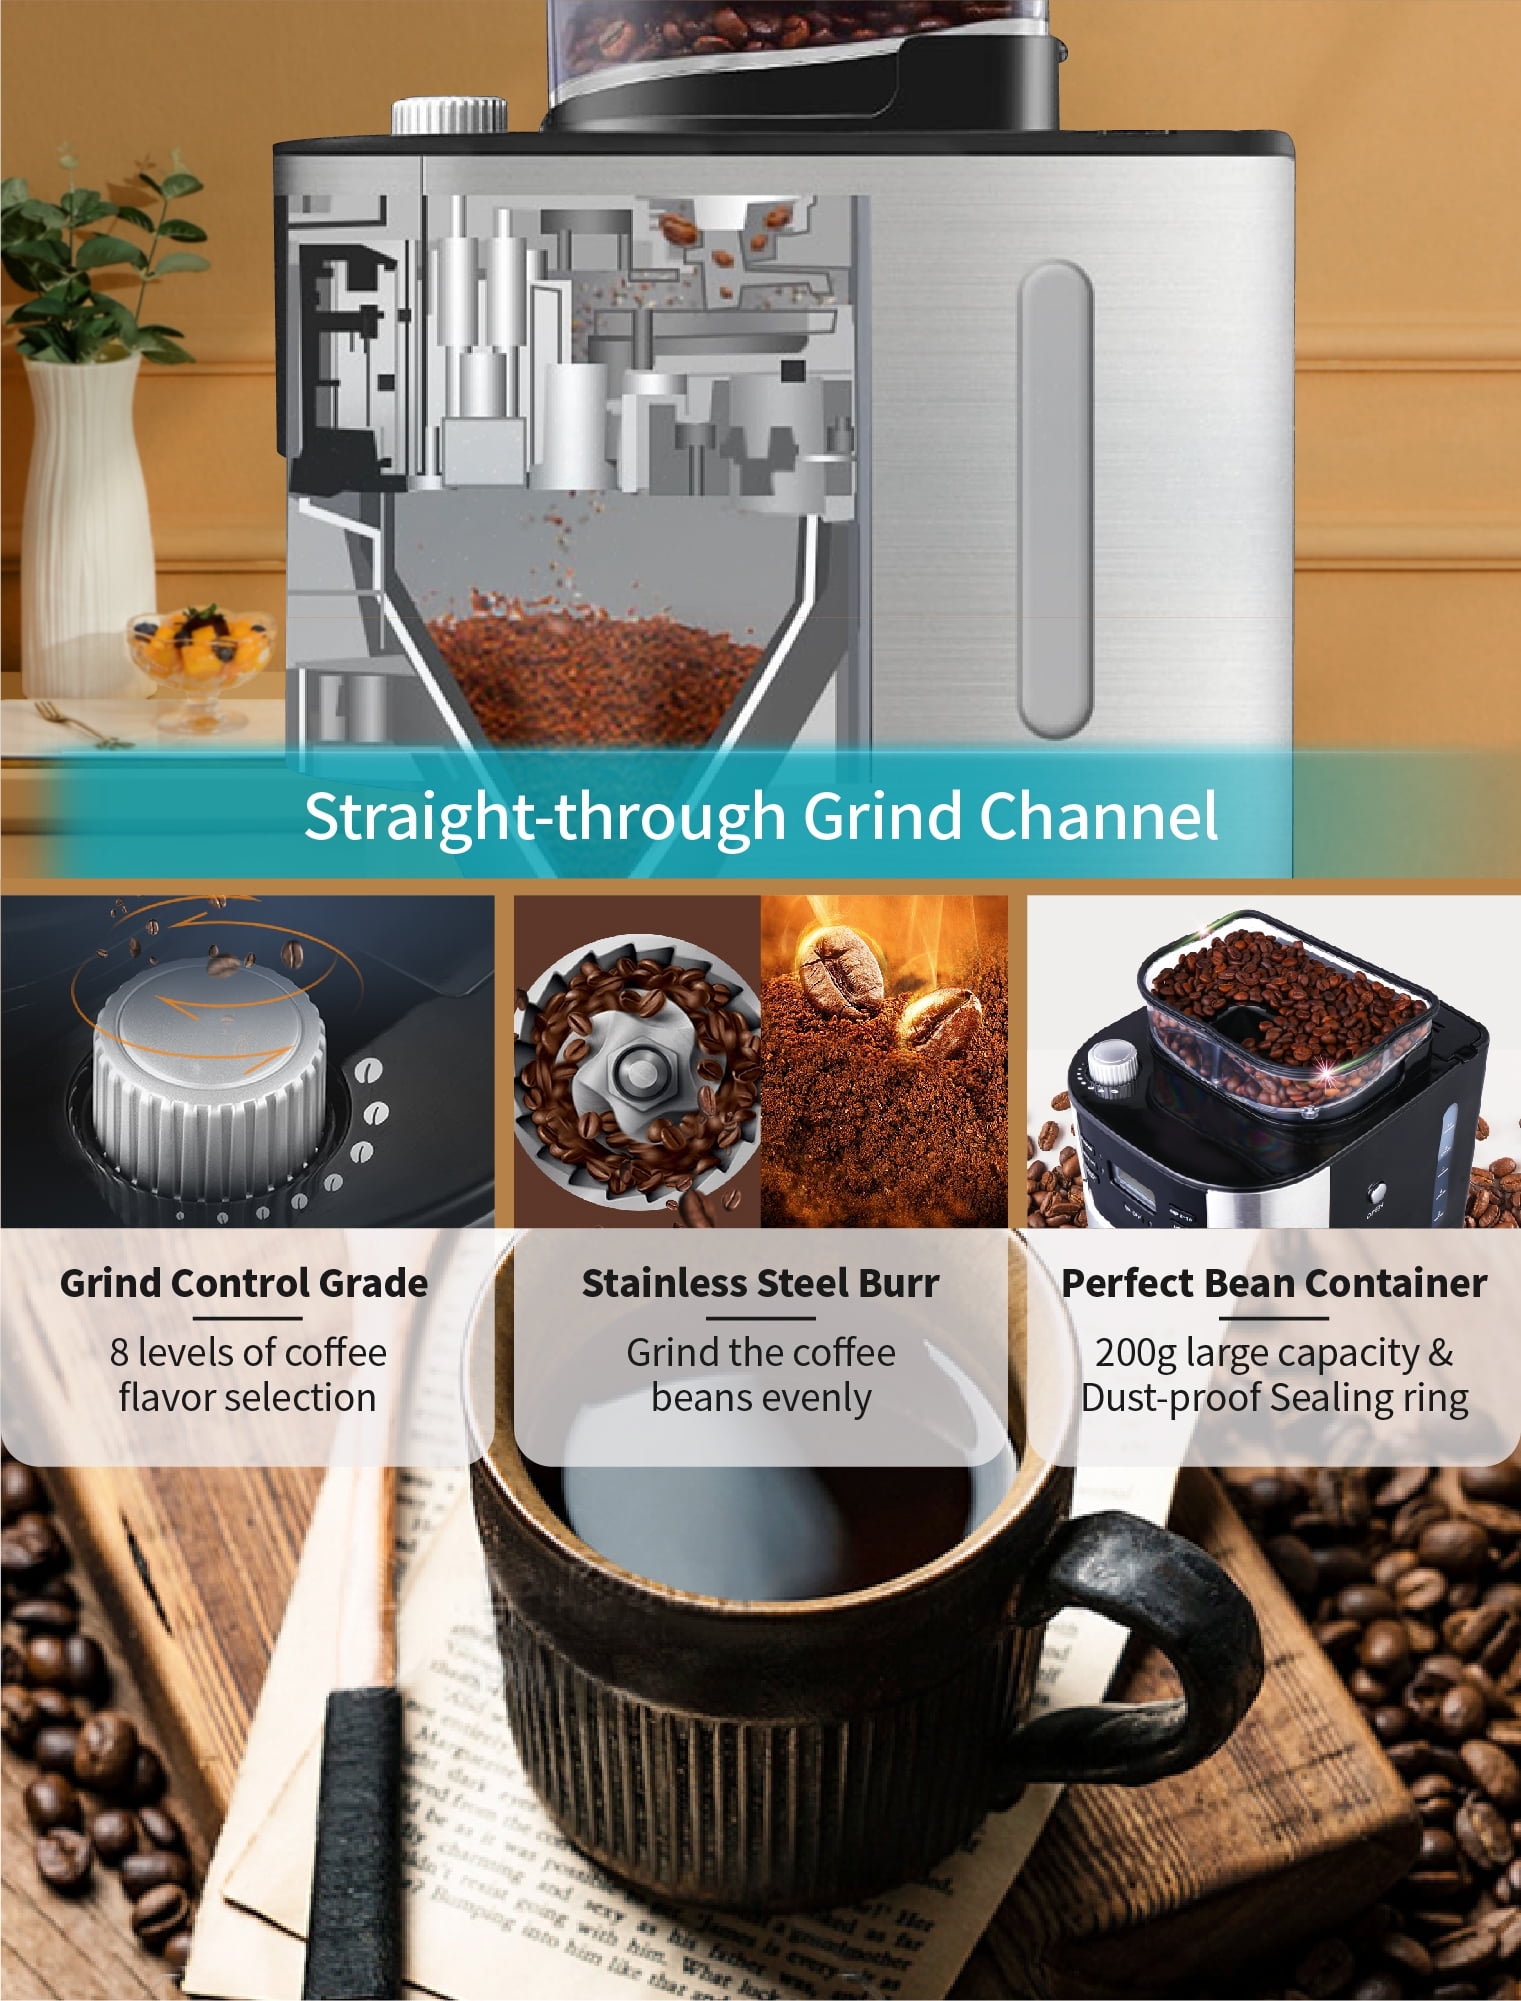 Gevi GECMA025AK-U 10 Cup Drip Coffee Maker Instruction Manual